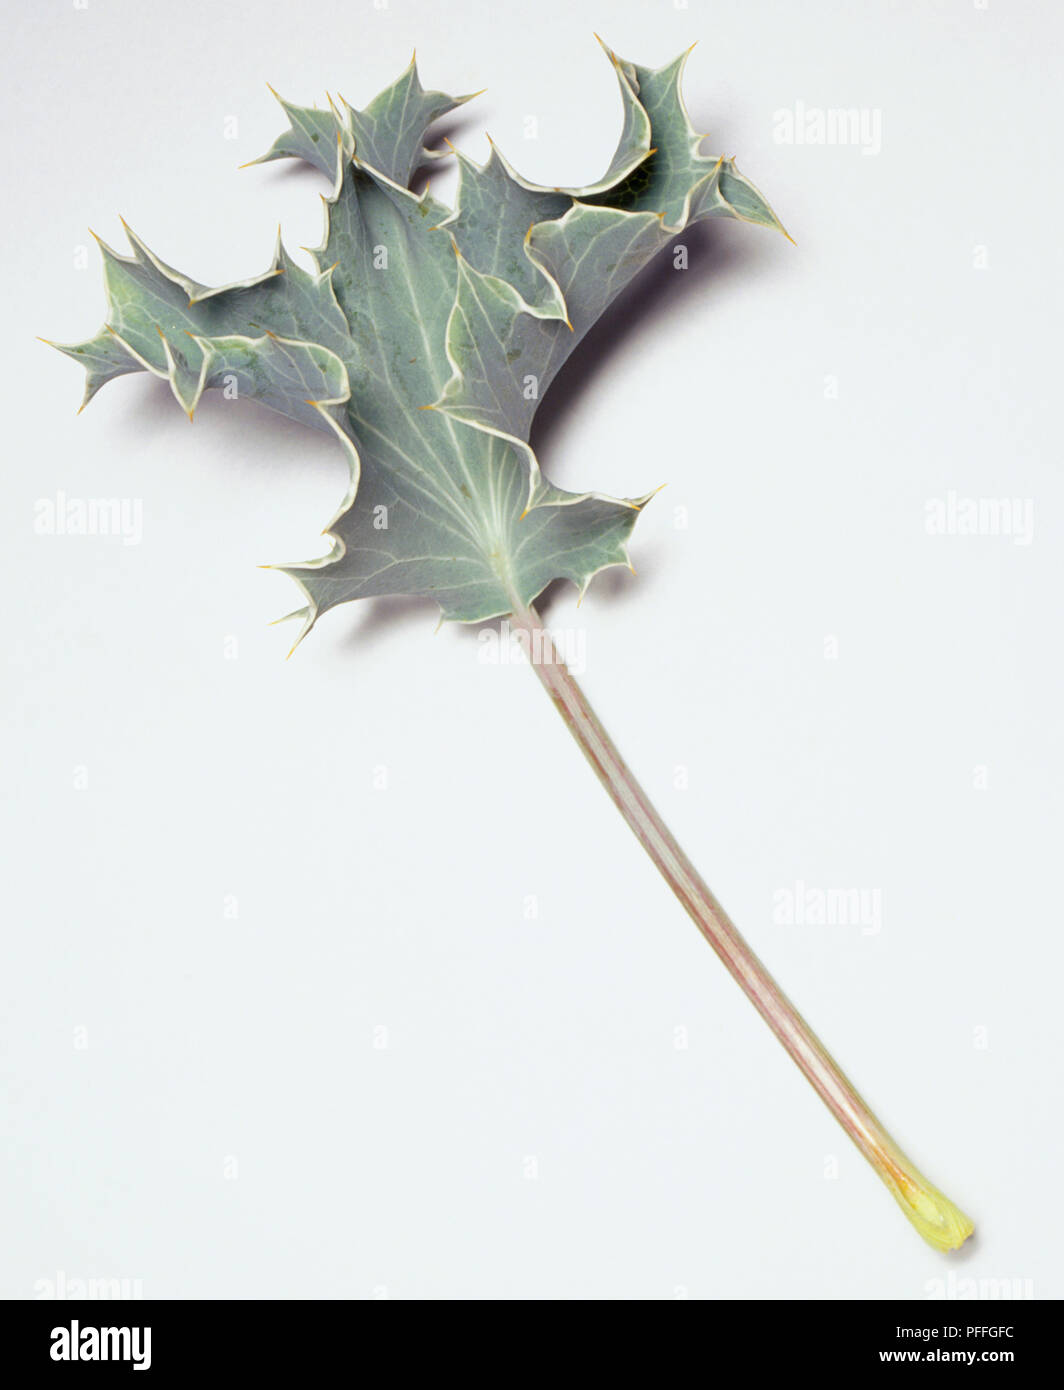 Eryngium maritimum, lower leaf of sea holly, green-blue spiny leaf. Stock Photo